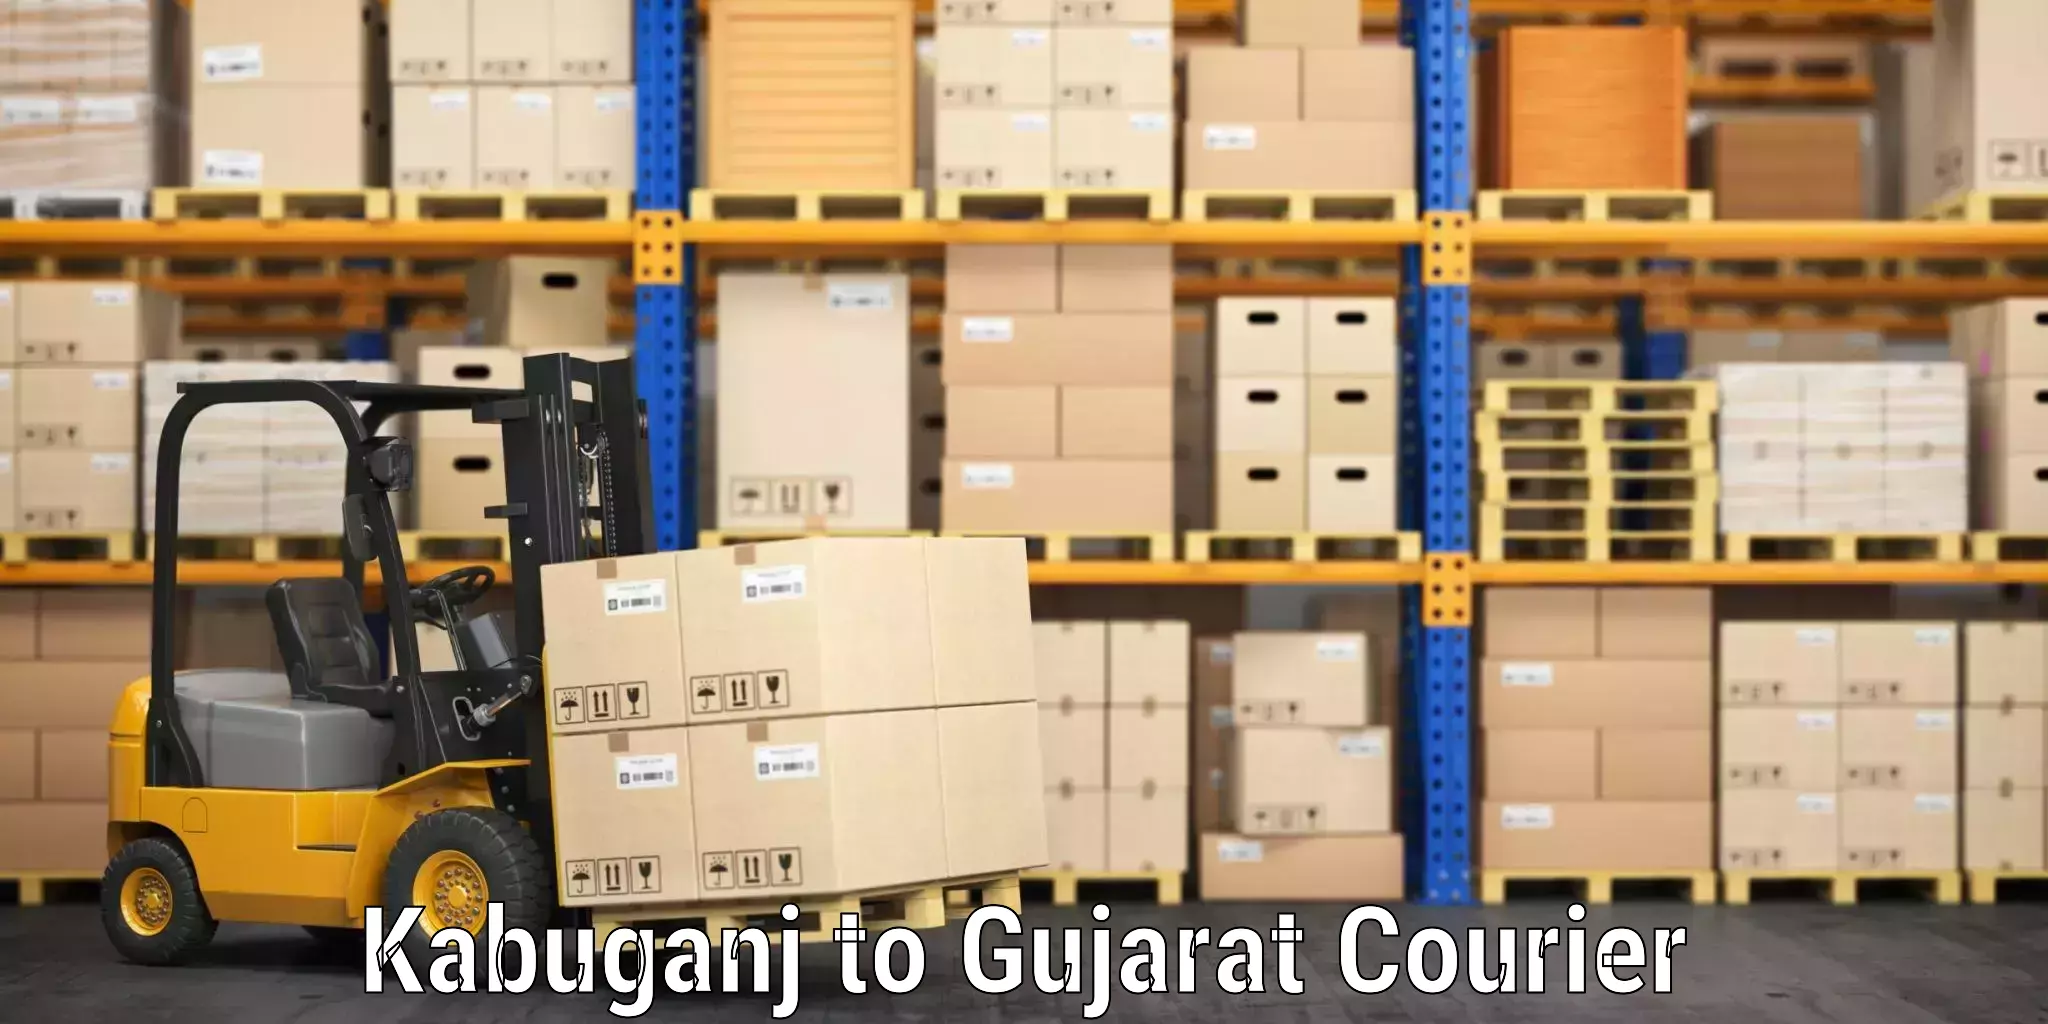 Baggage transport professionals Kabuganj to Gujarat